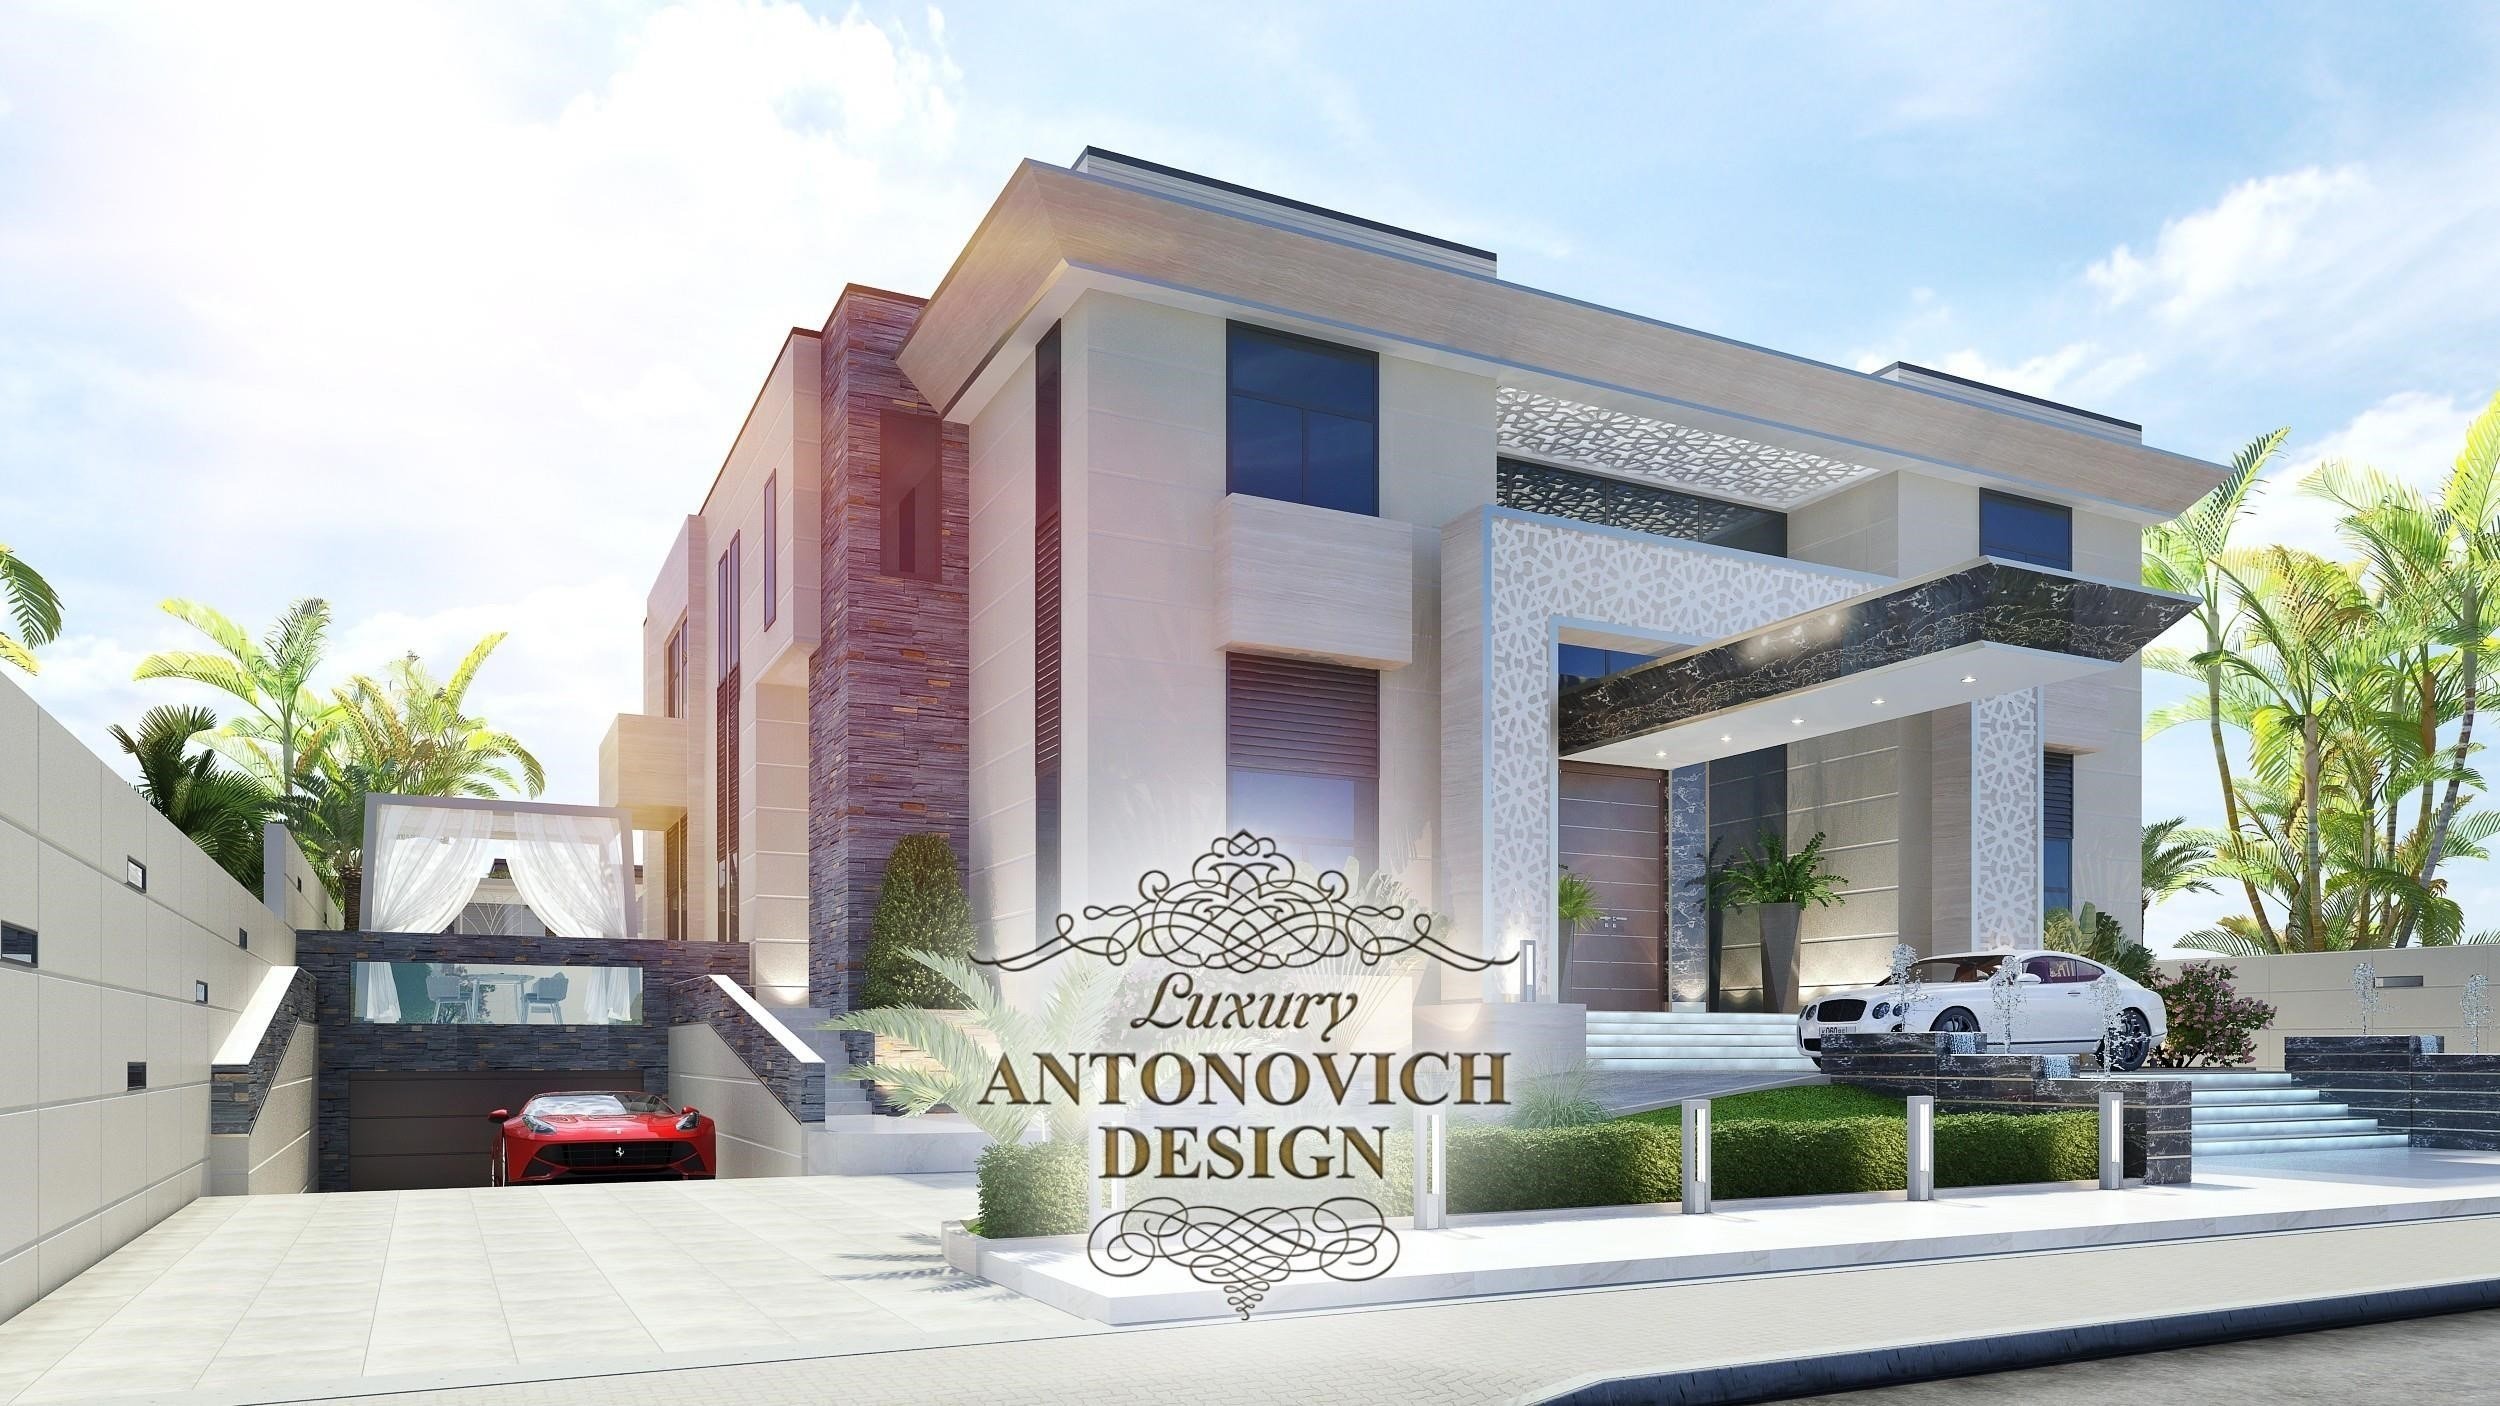 exterior-arxitekturny-proekt-v-stile-bungalo-antonovich-design-2